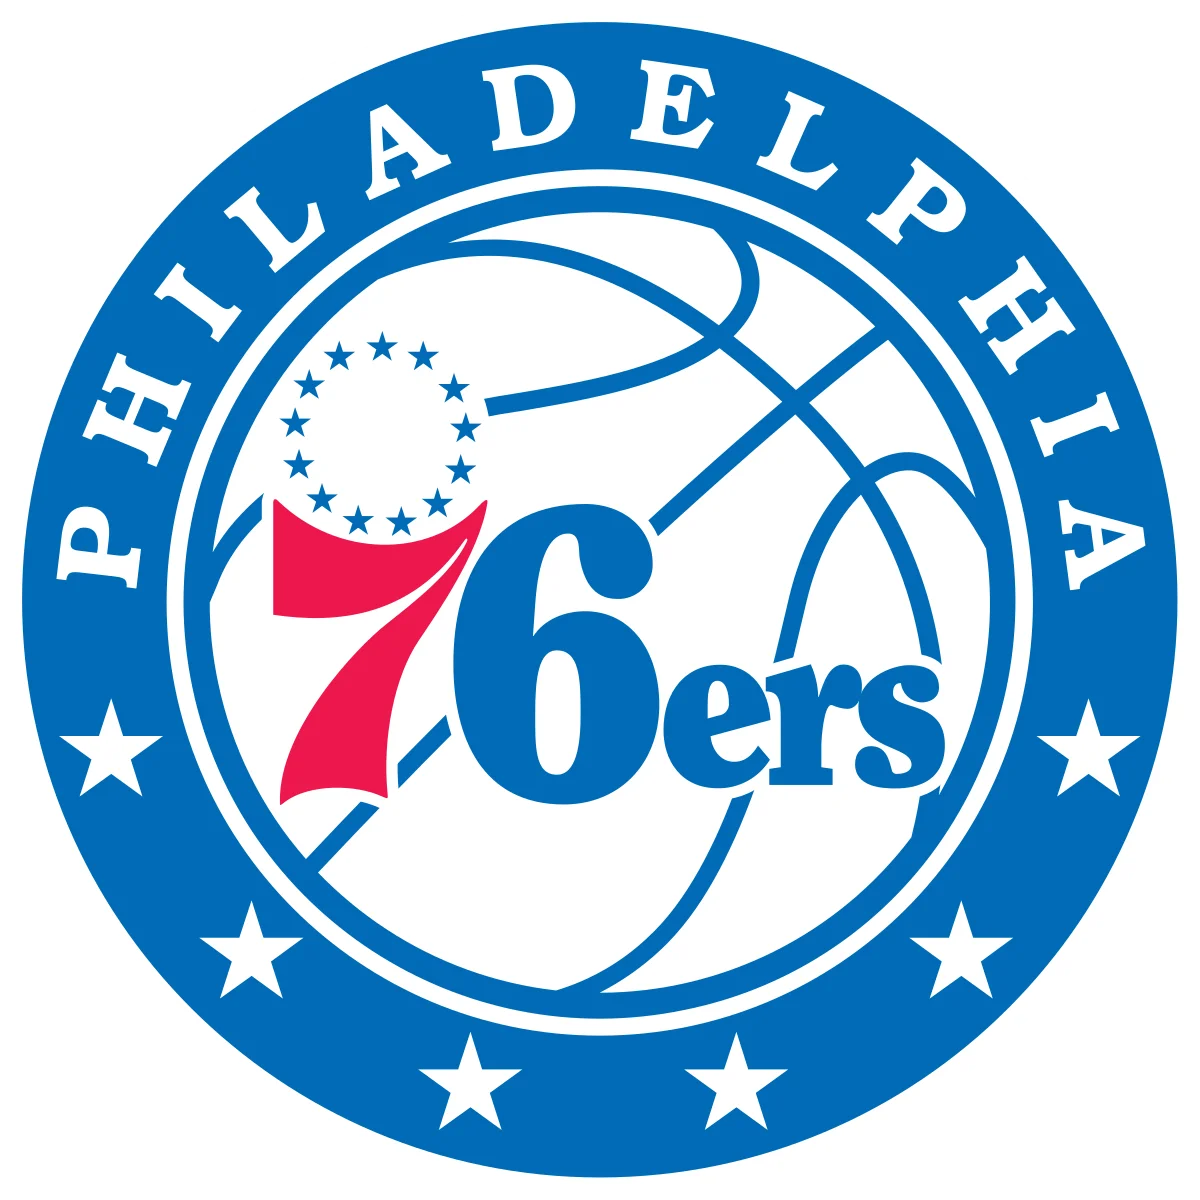 Philadelphia_76ers_logo